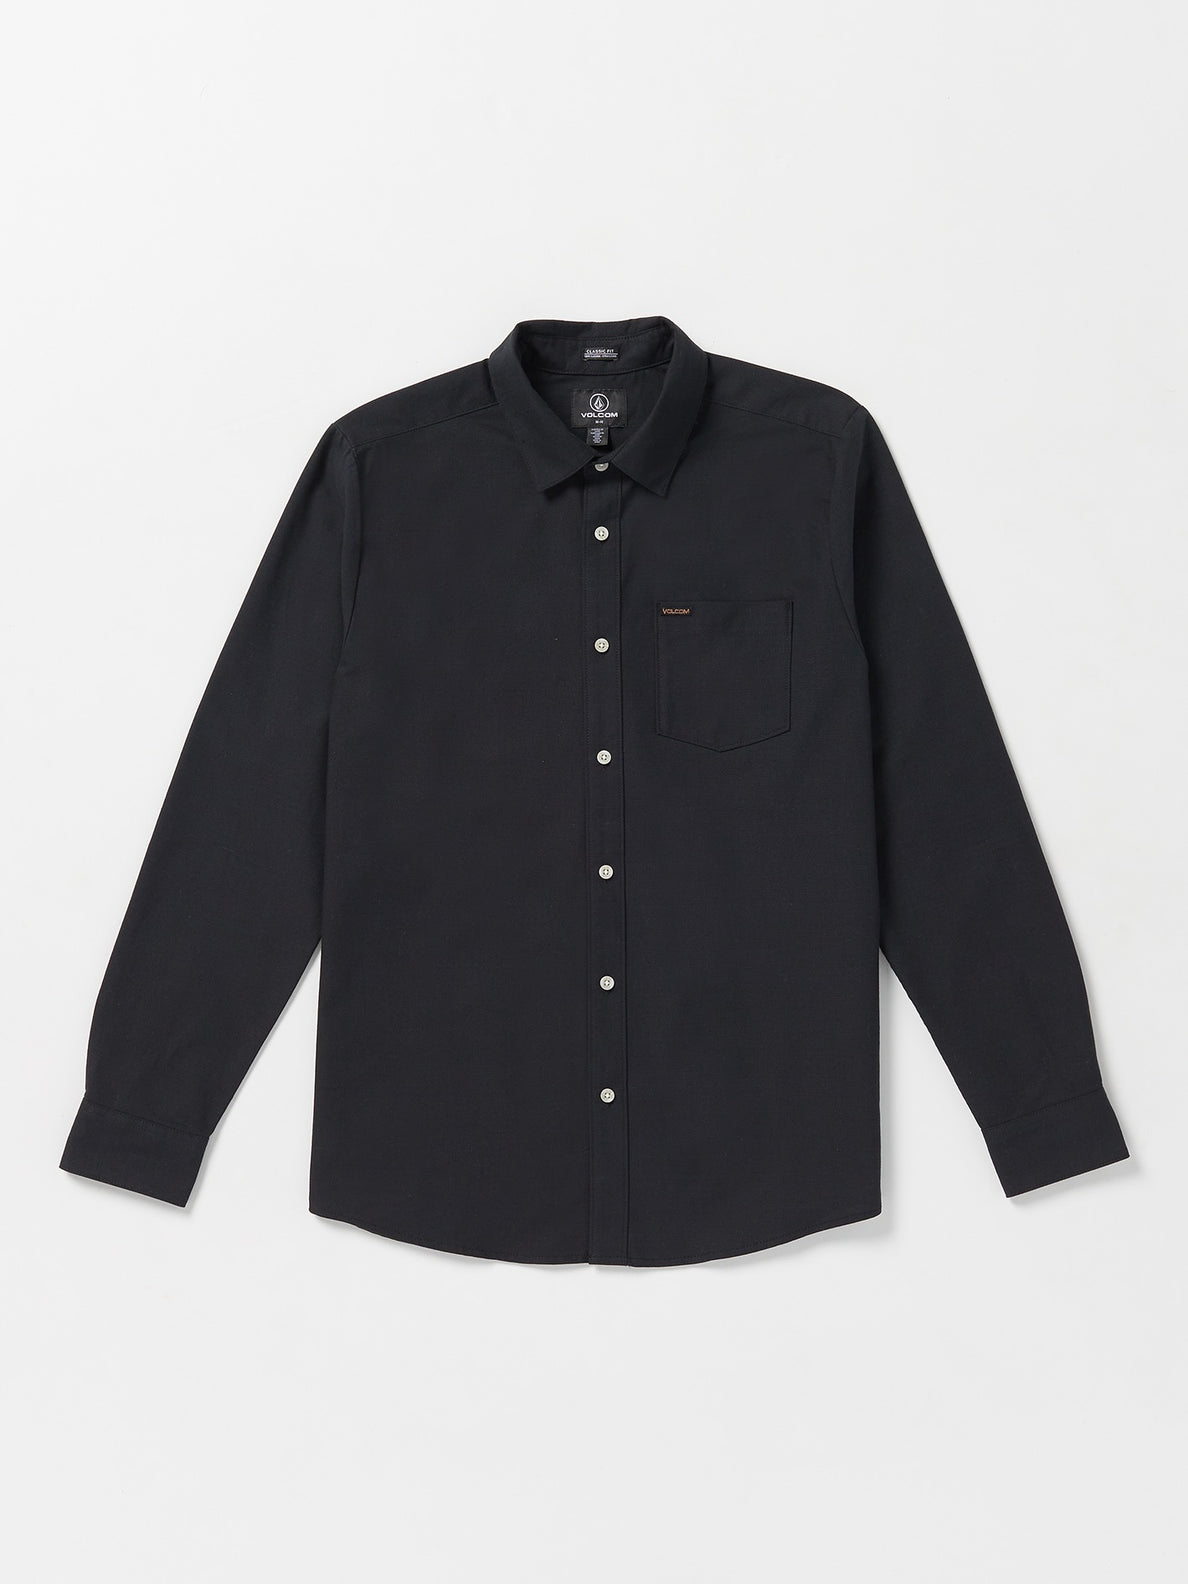 Veeco Oxford Long Sleeve Shirt - Black